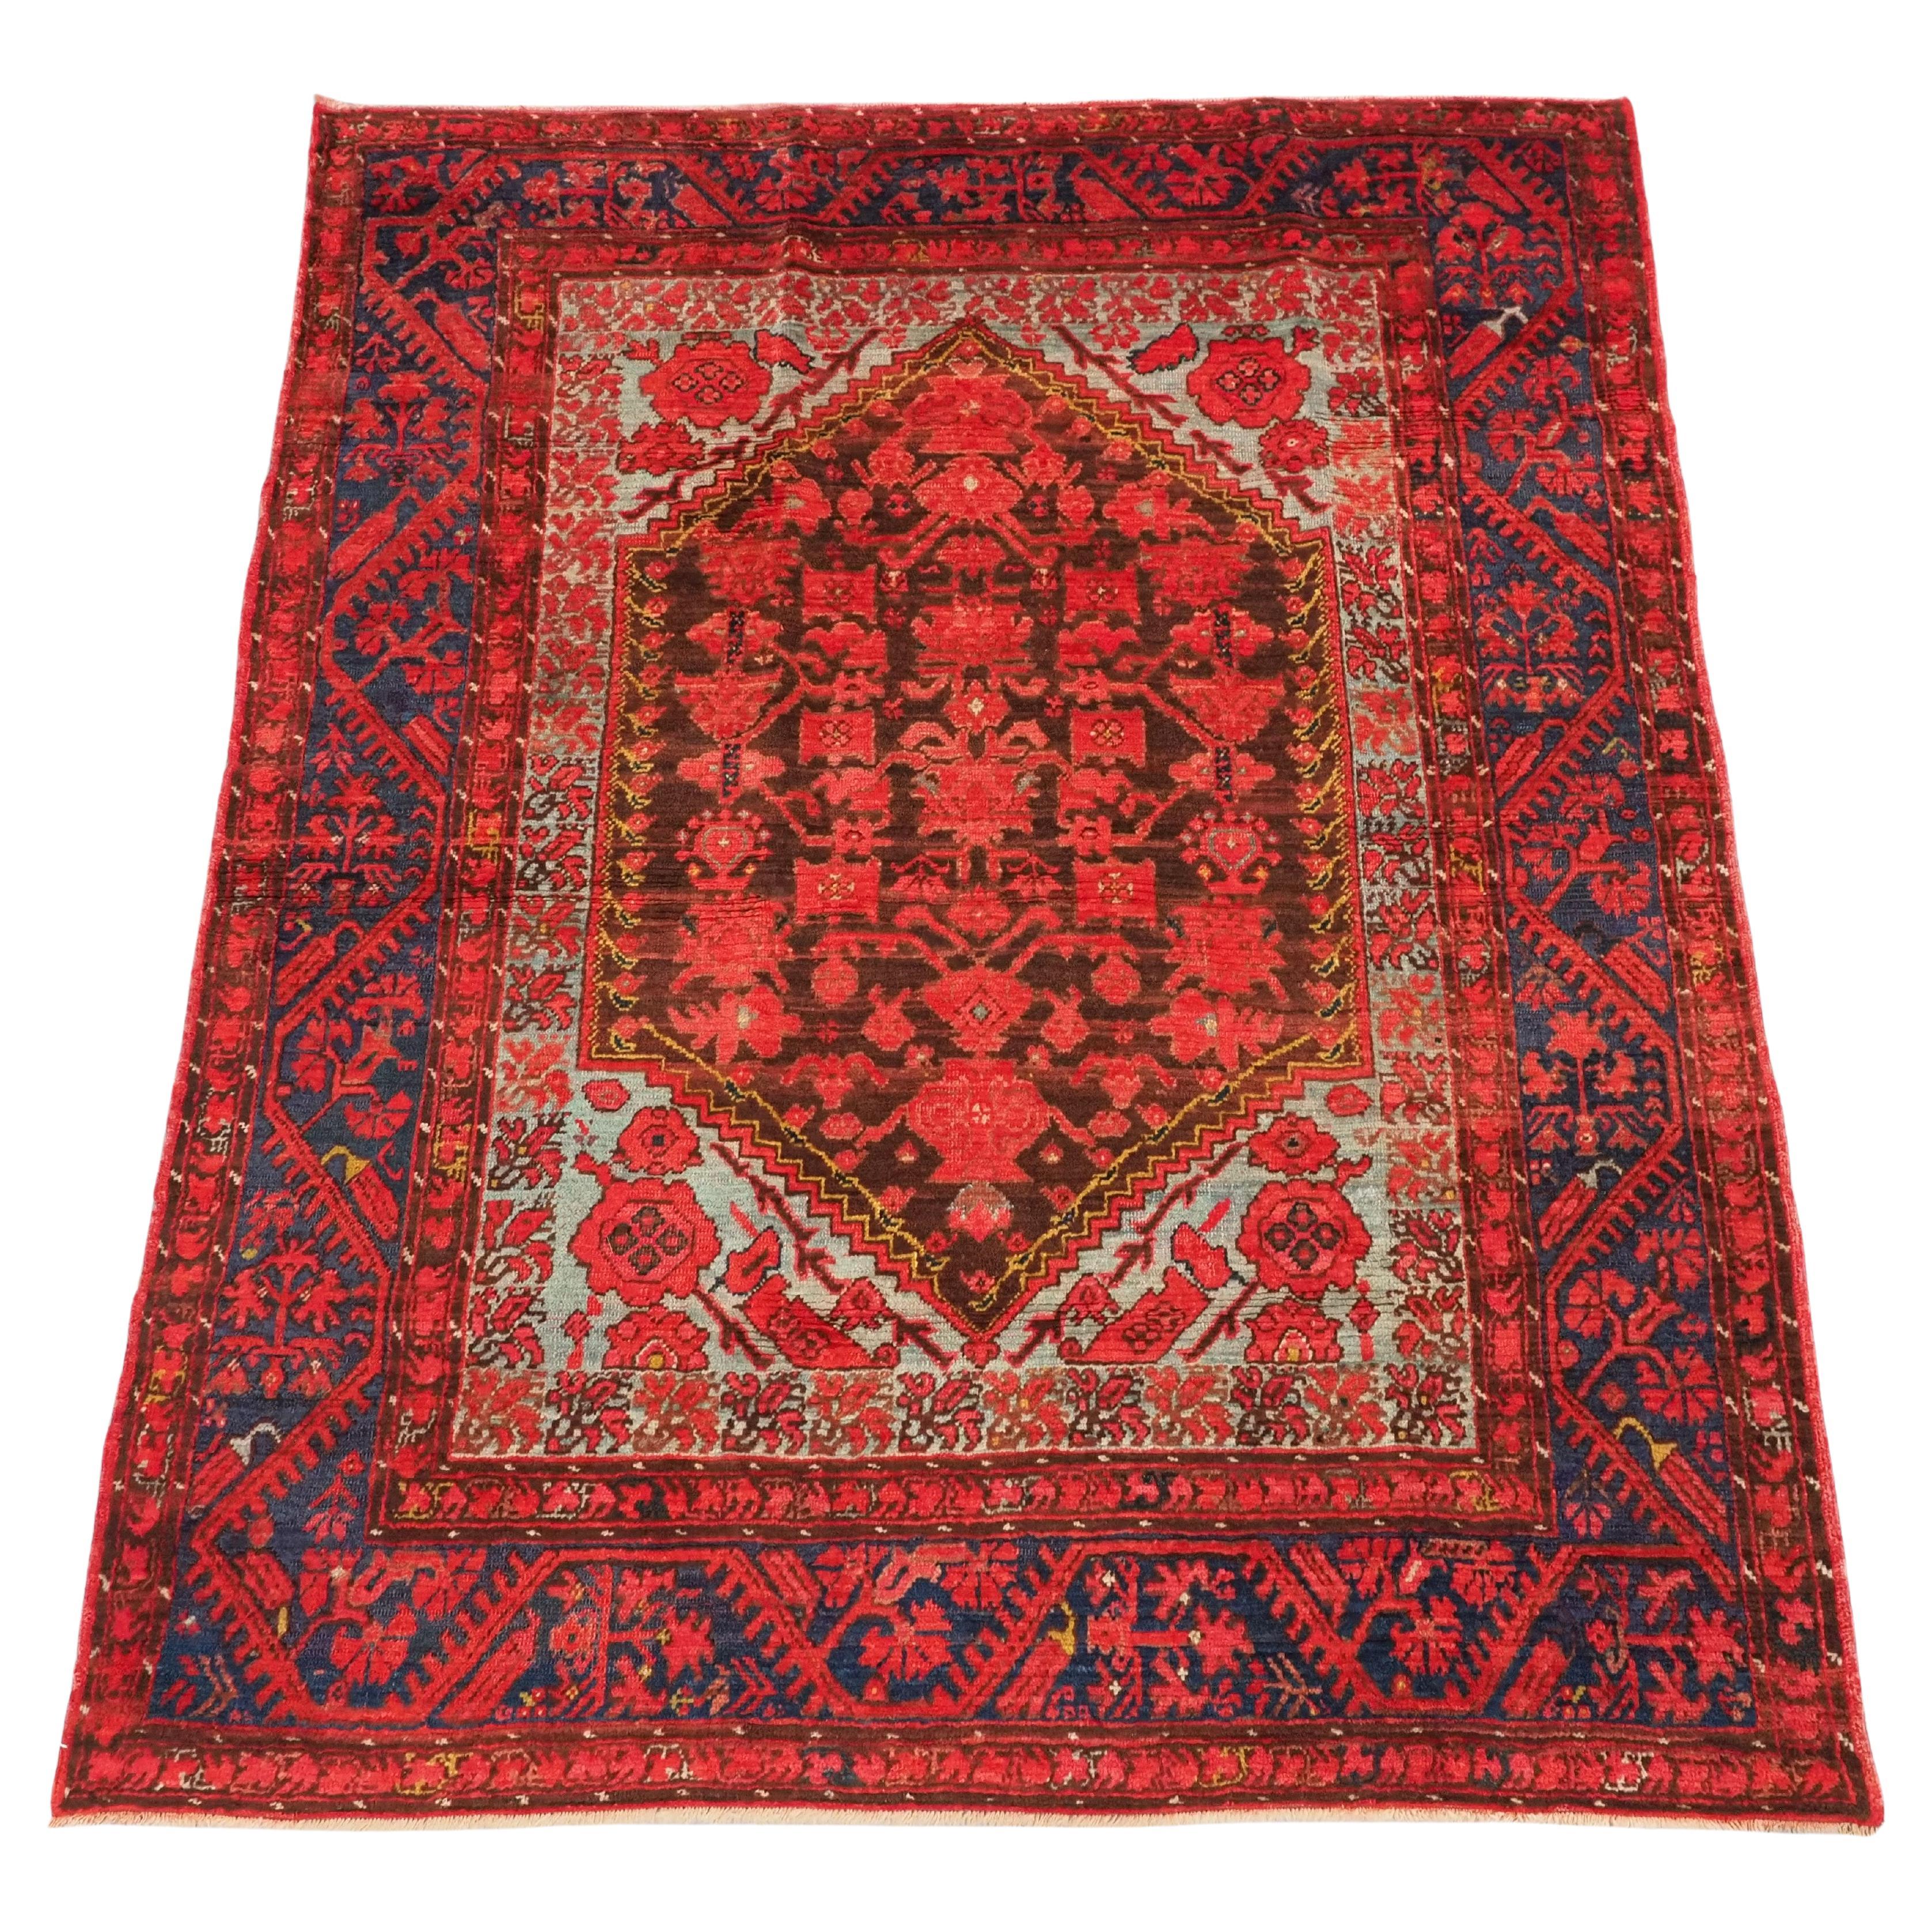  Ancien tapis turc Komurcu Kula de conception traditionnelle.  Circa 1900.